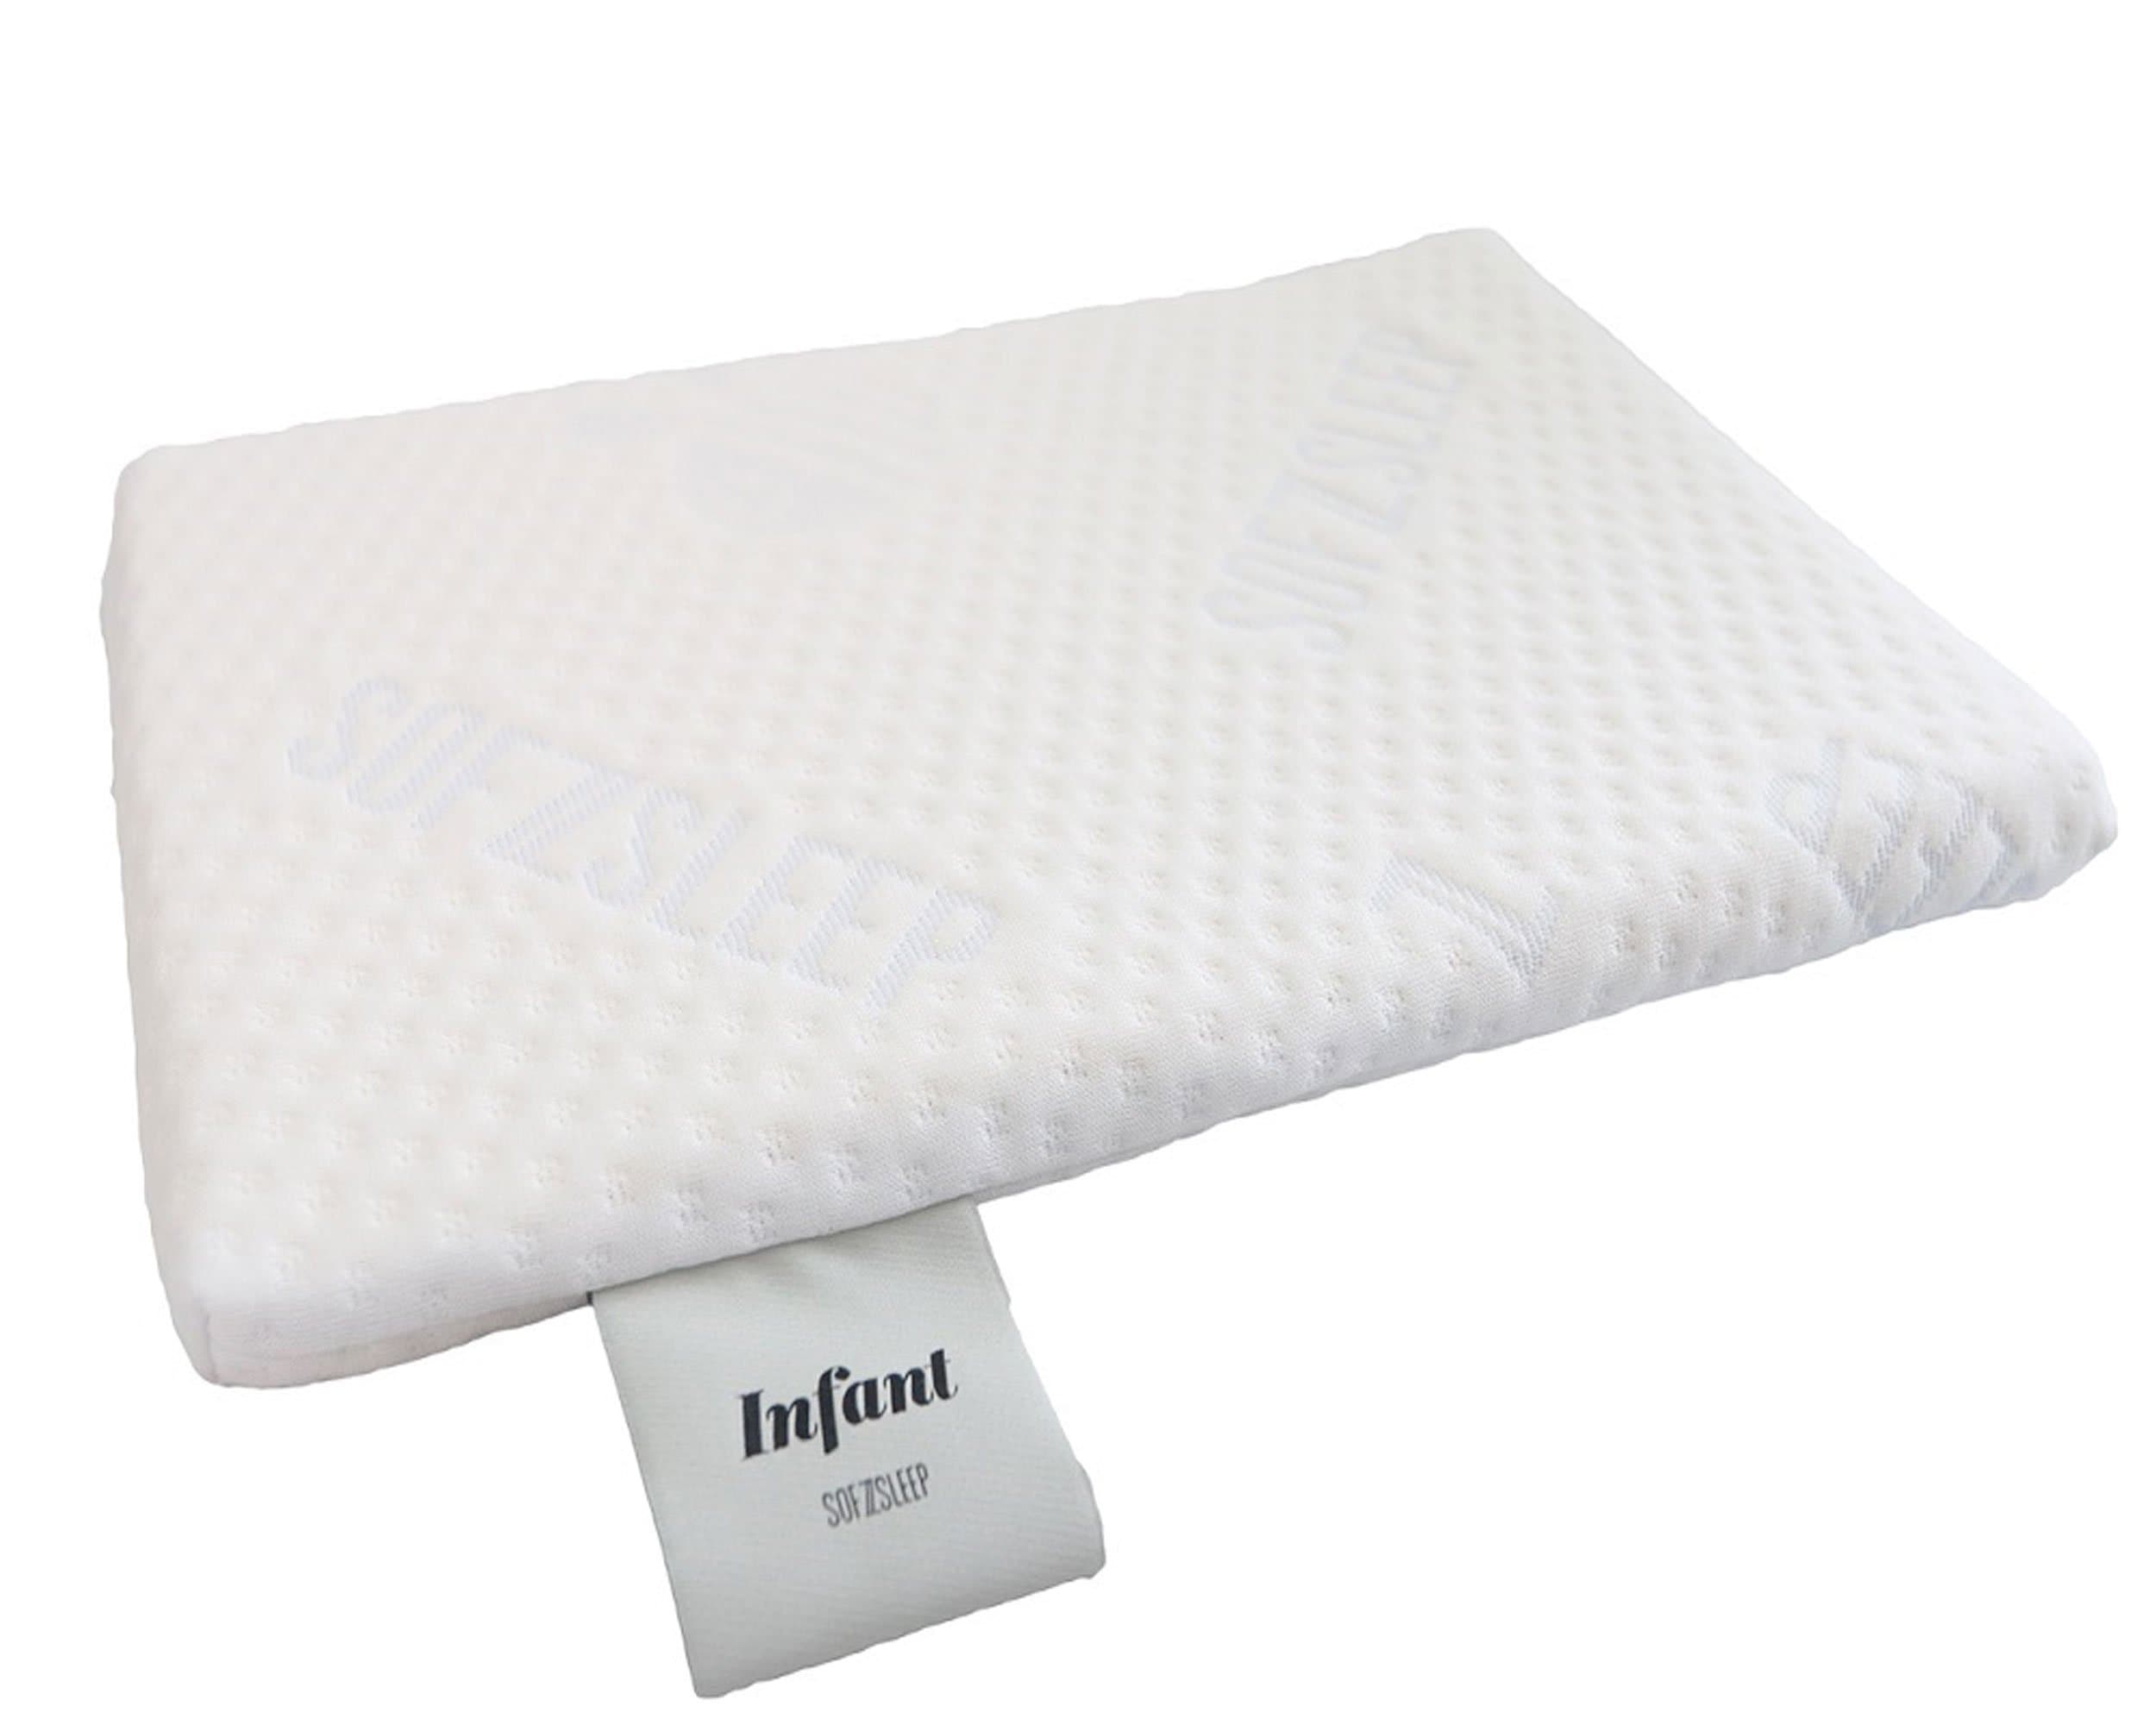 Sofzsleep Baby Infant Latex Pillow (L36 x W25 x H2.5 cm)